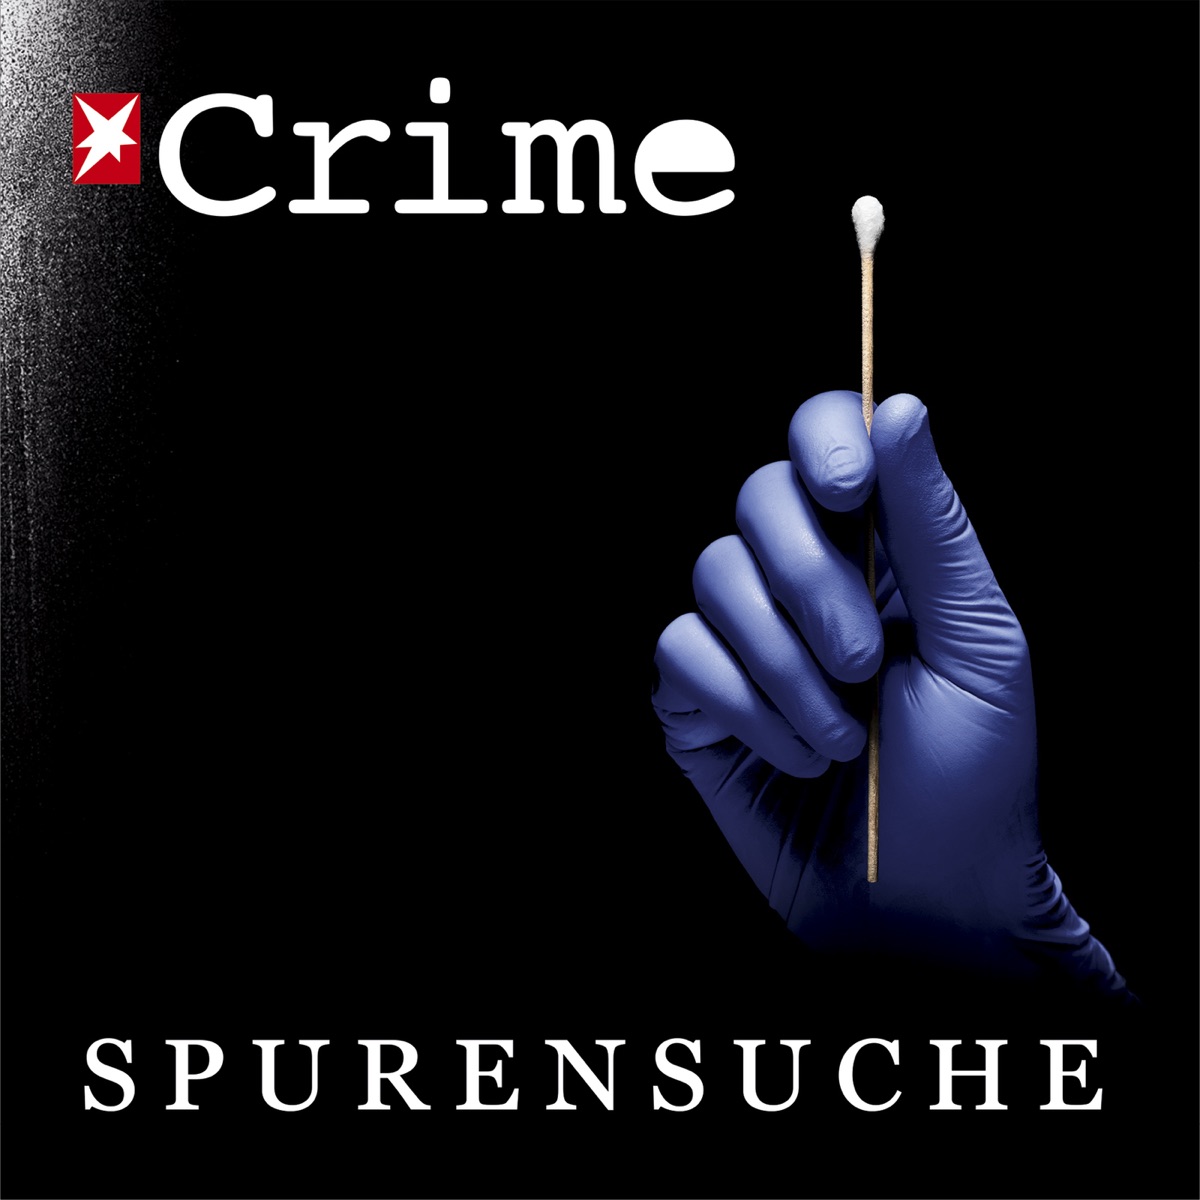 Stern Crime Spurensuche Podcast Podtail